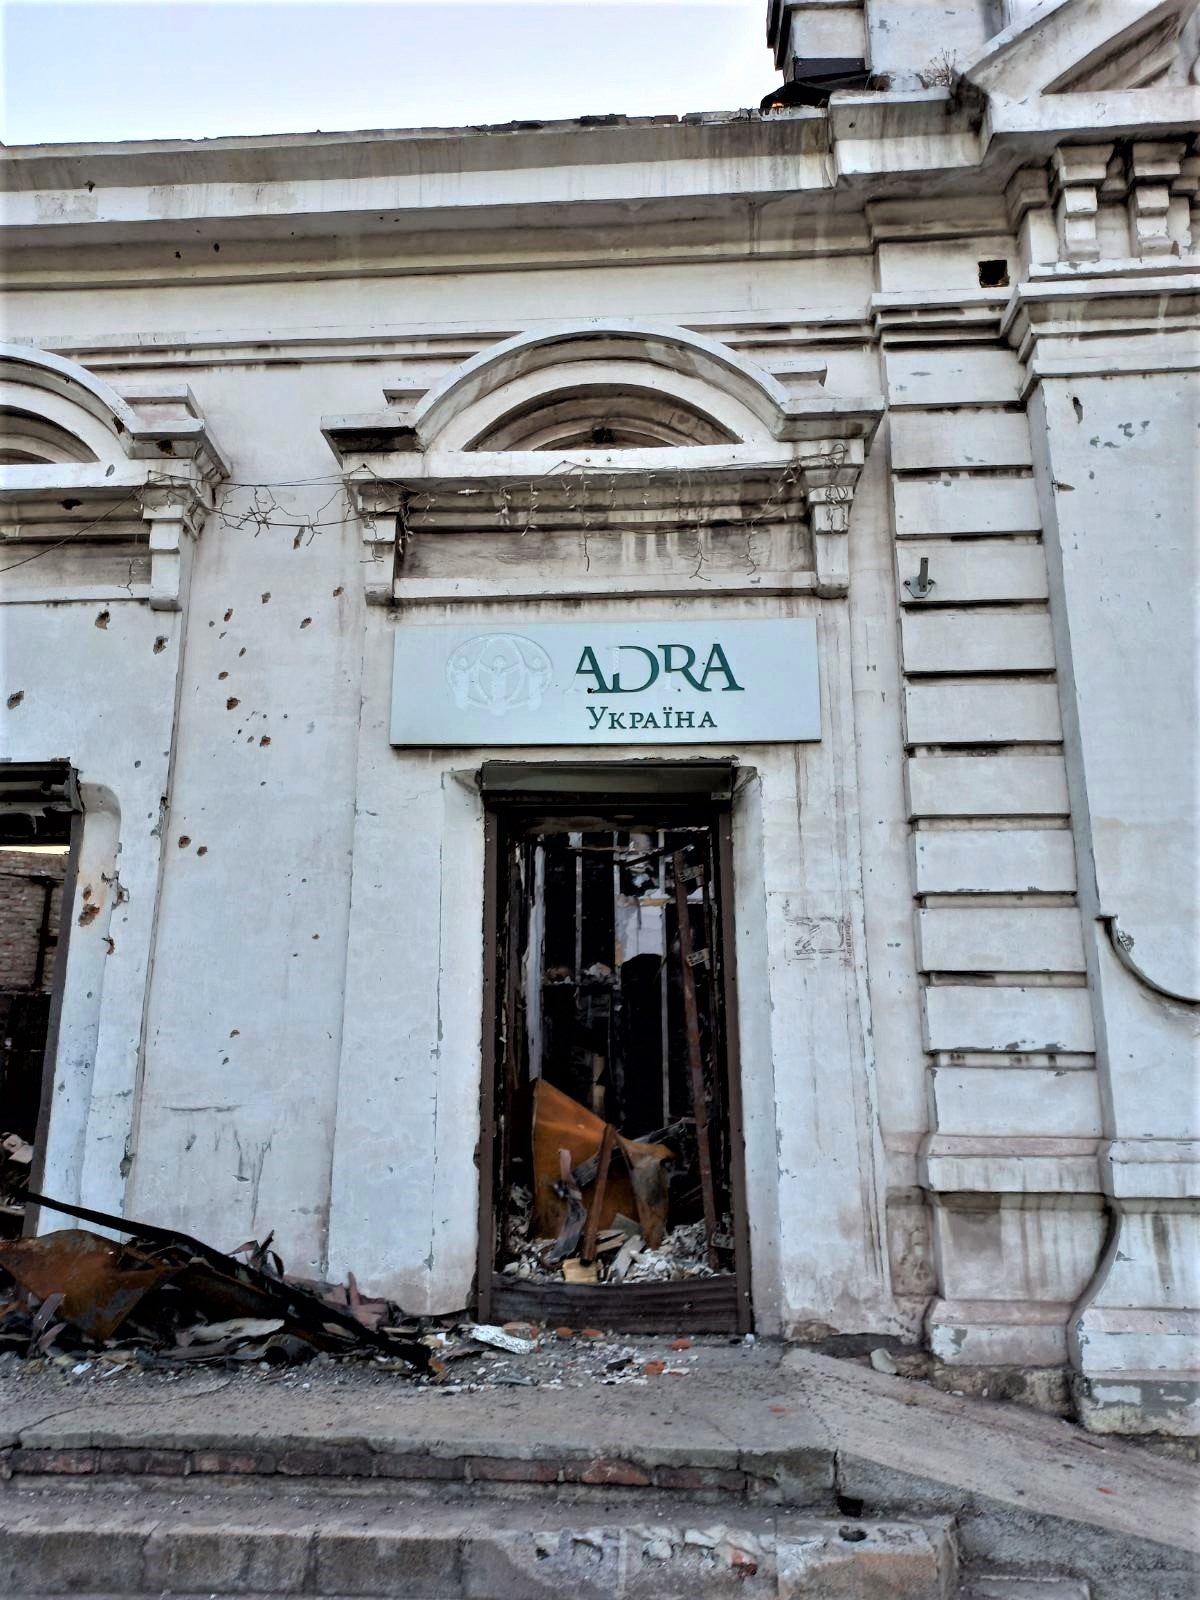 ADRA office in Mariupol, Ukraine ruined